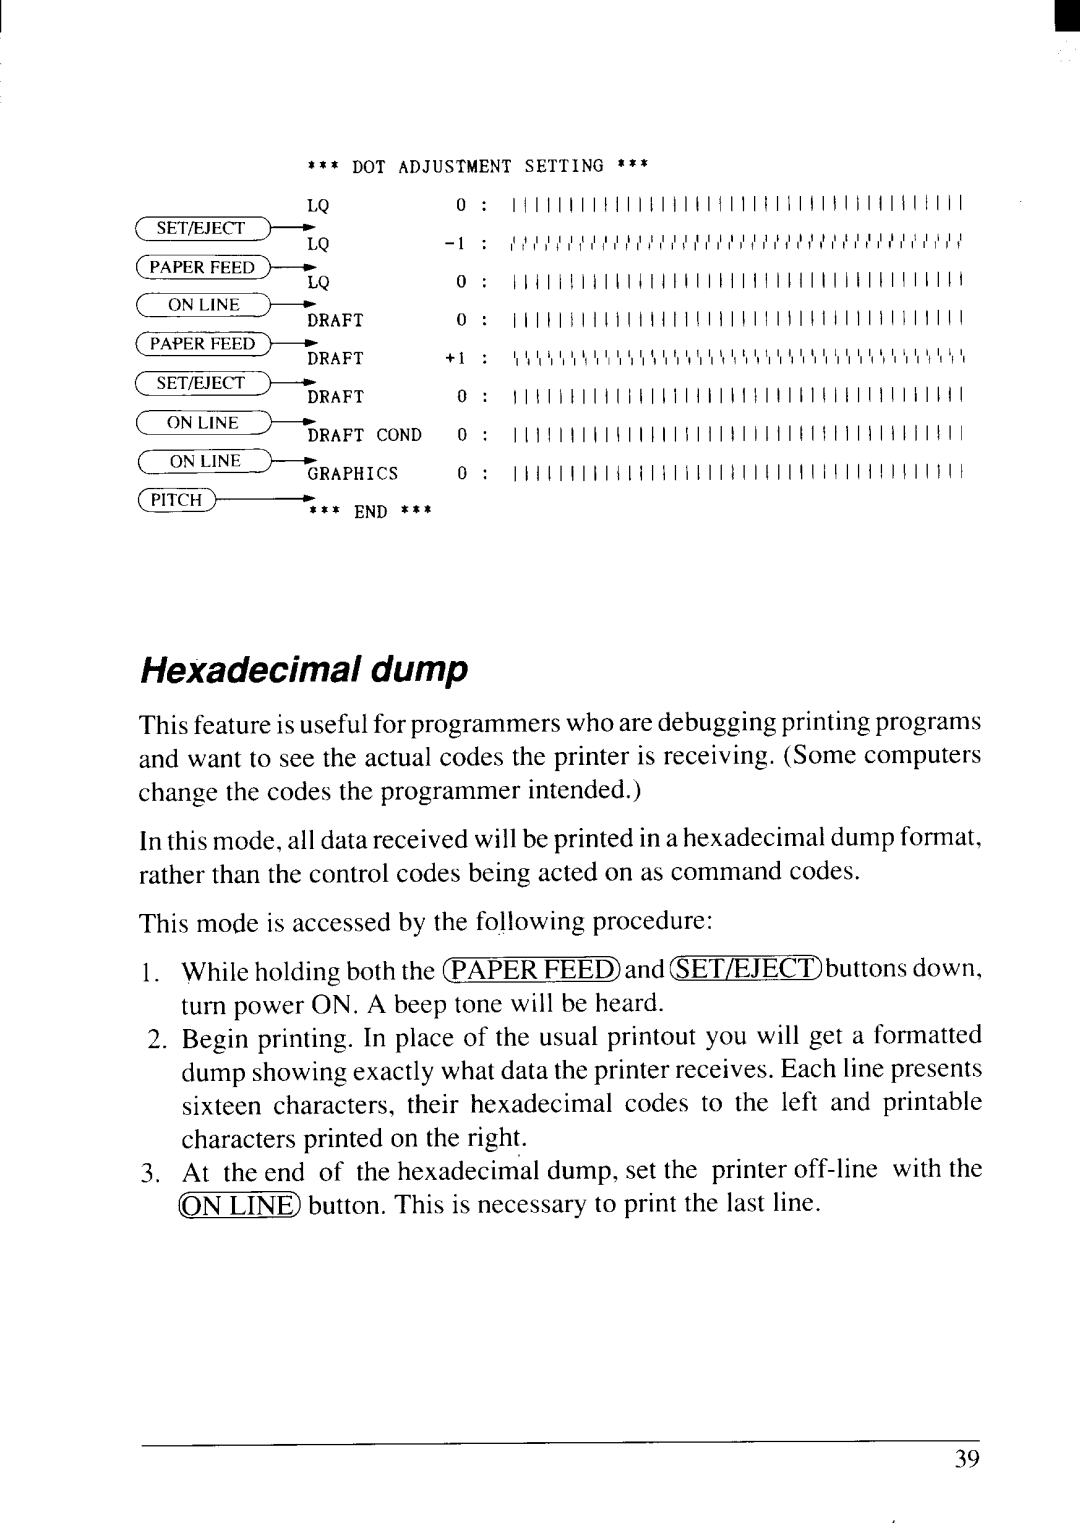 Star Micronics NX-2415II user manual Hexadecimal dump 